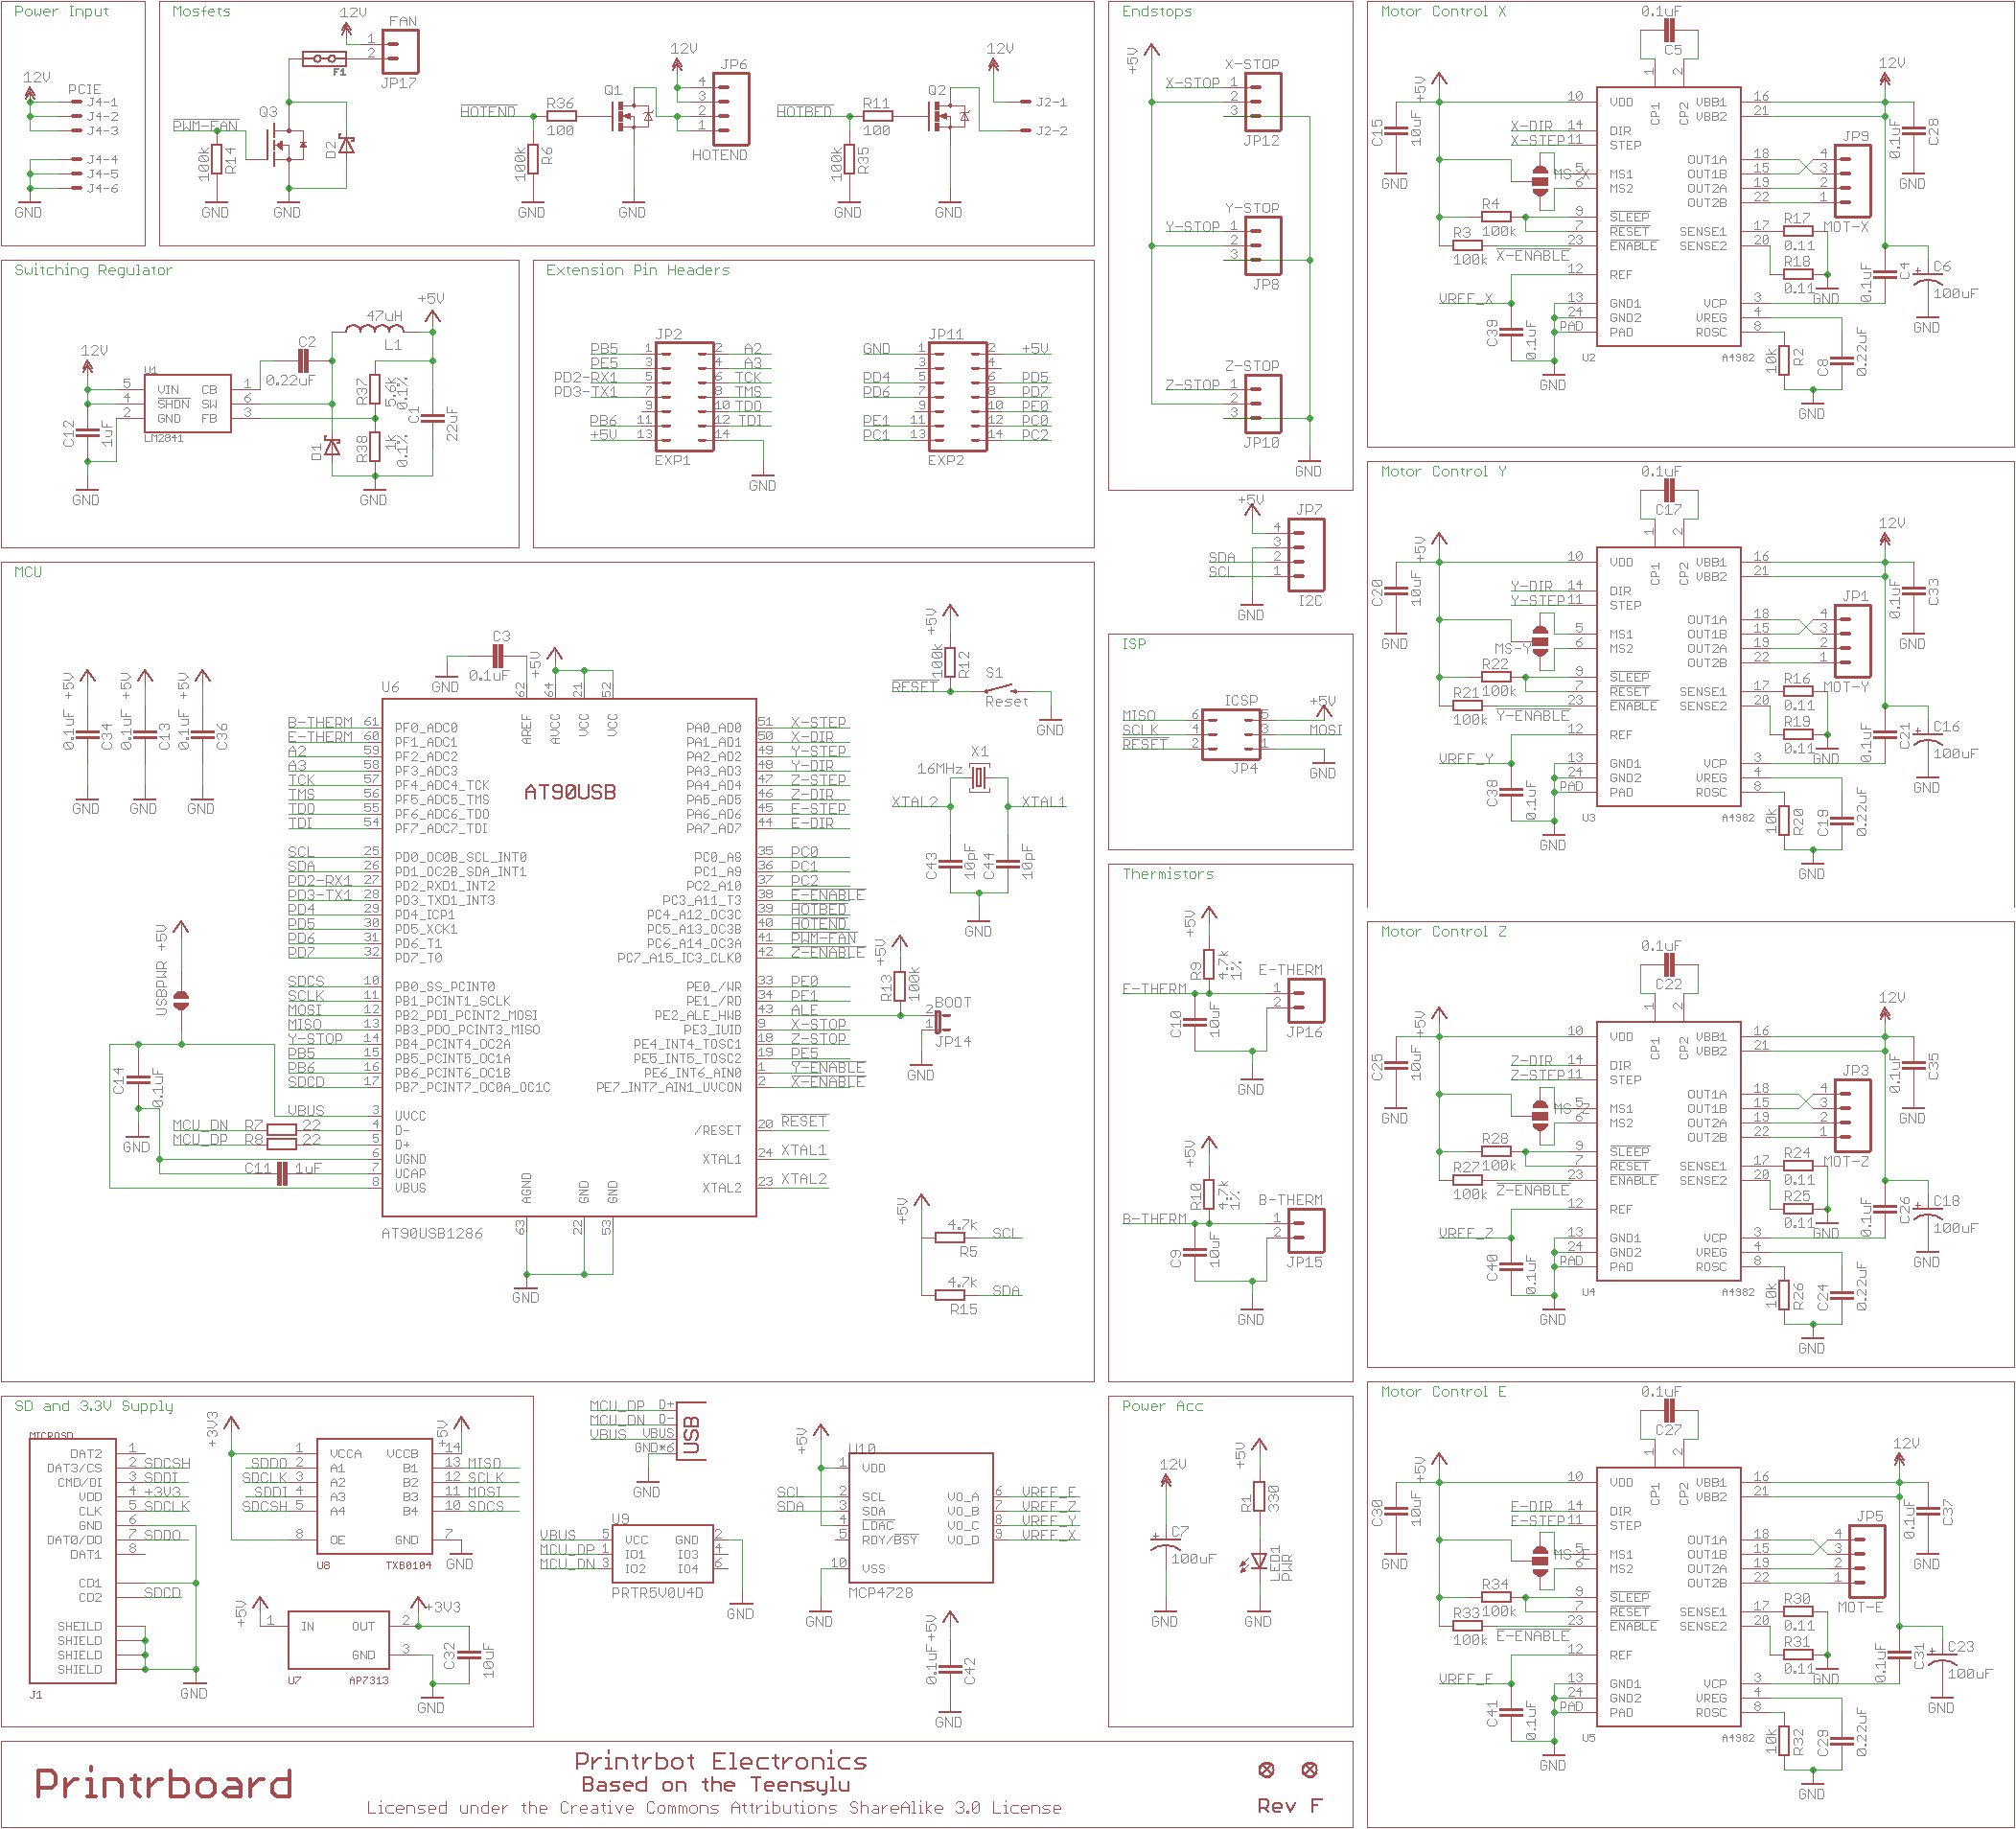 Printrboard-revF2 schematic